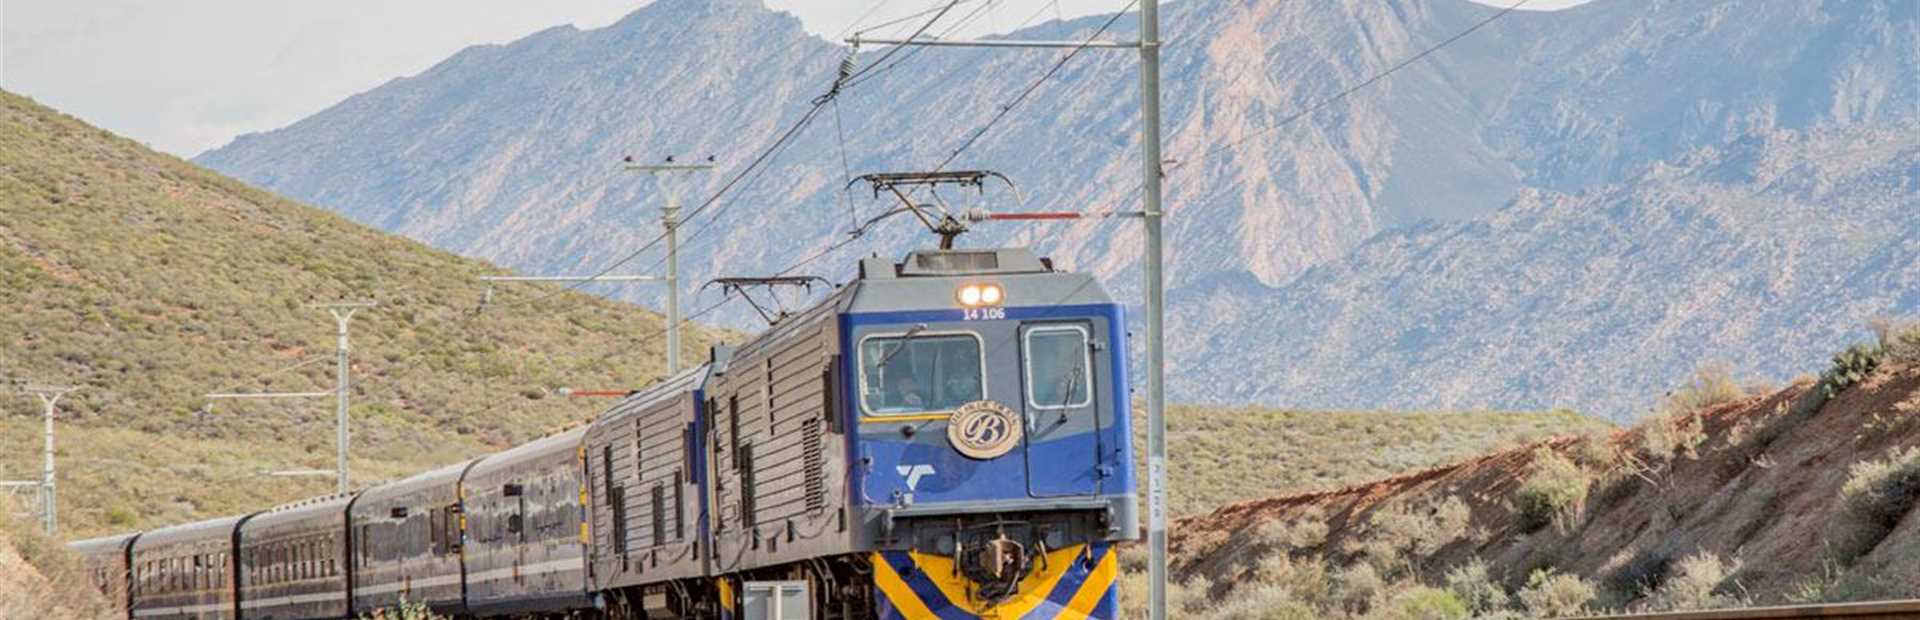 South Africa - Blue Train - Pretoria to Cape Town